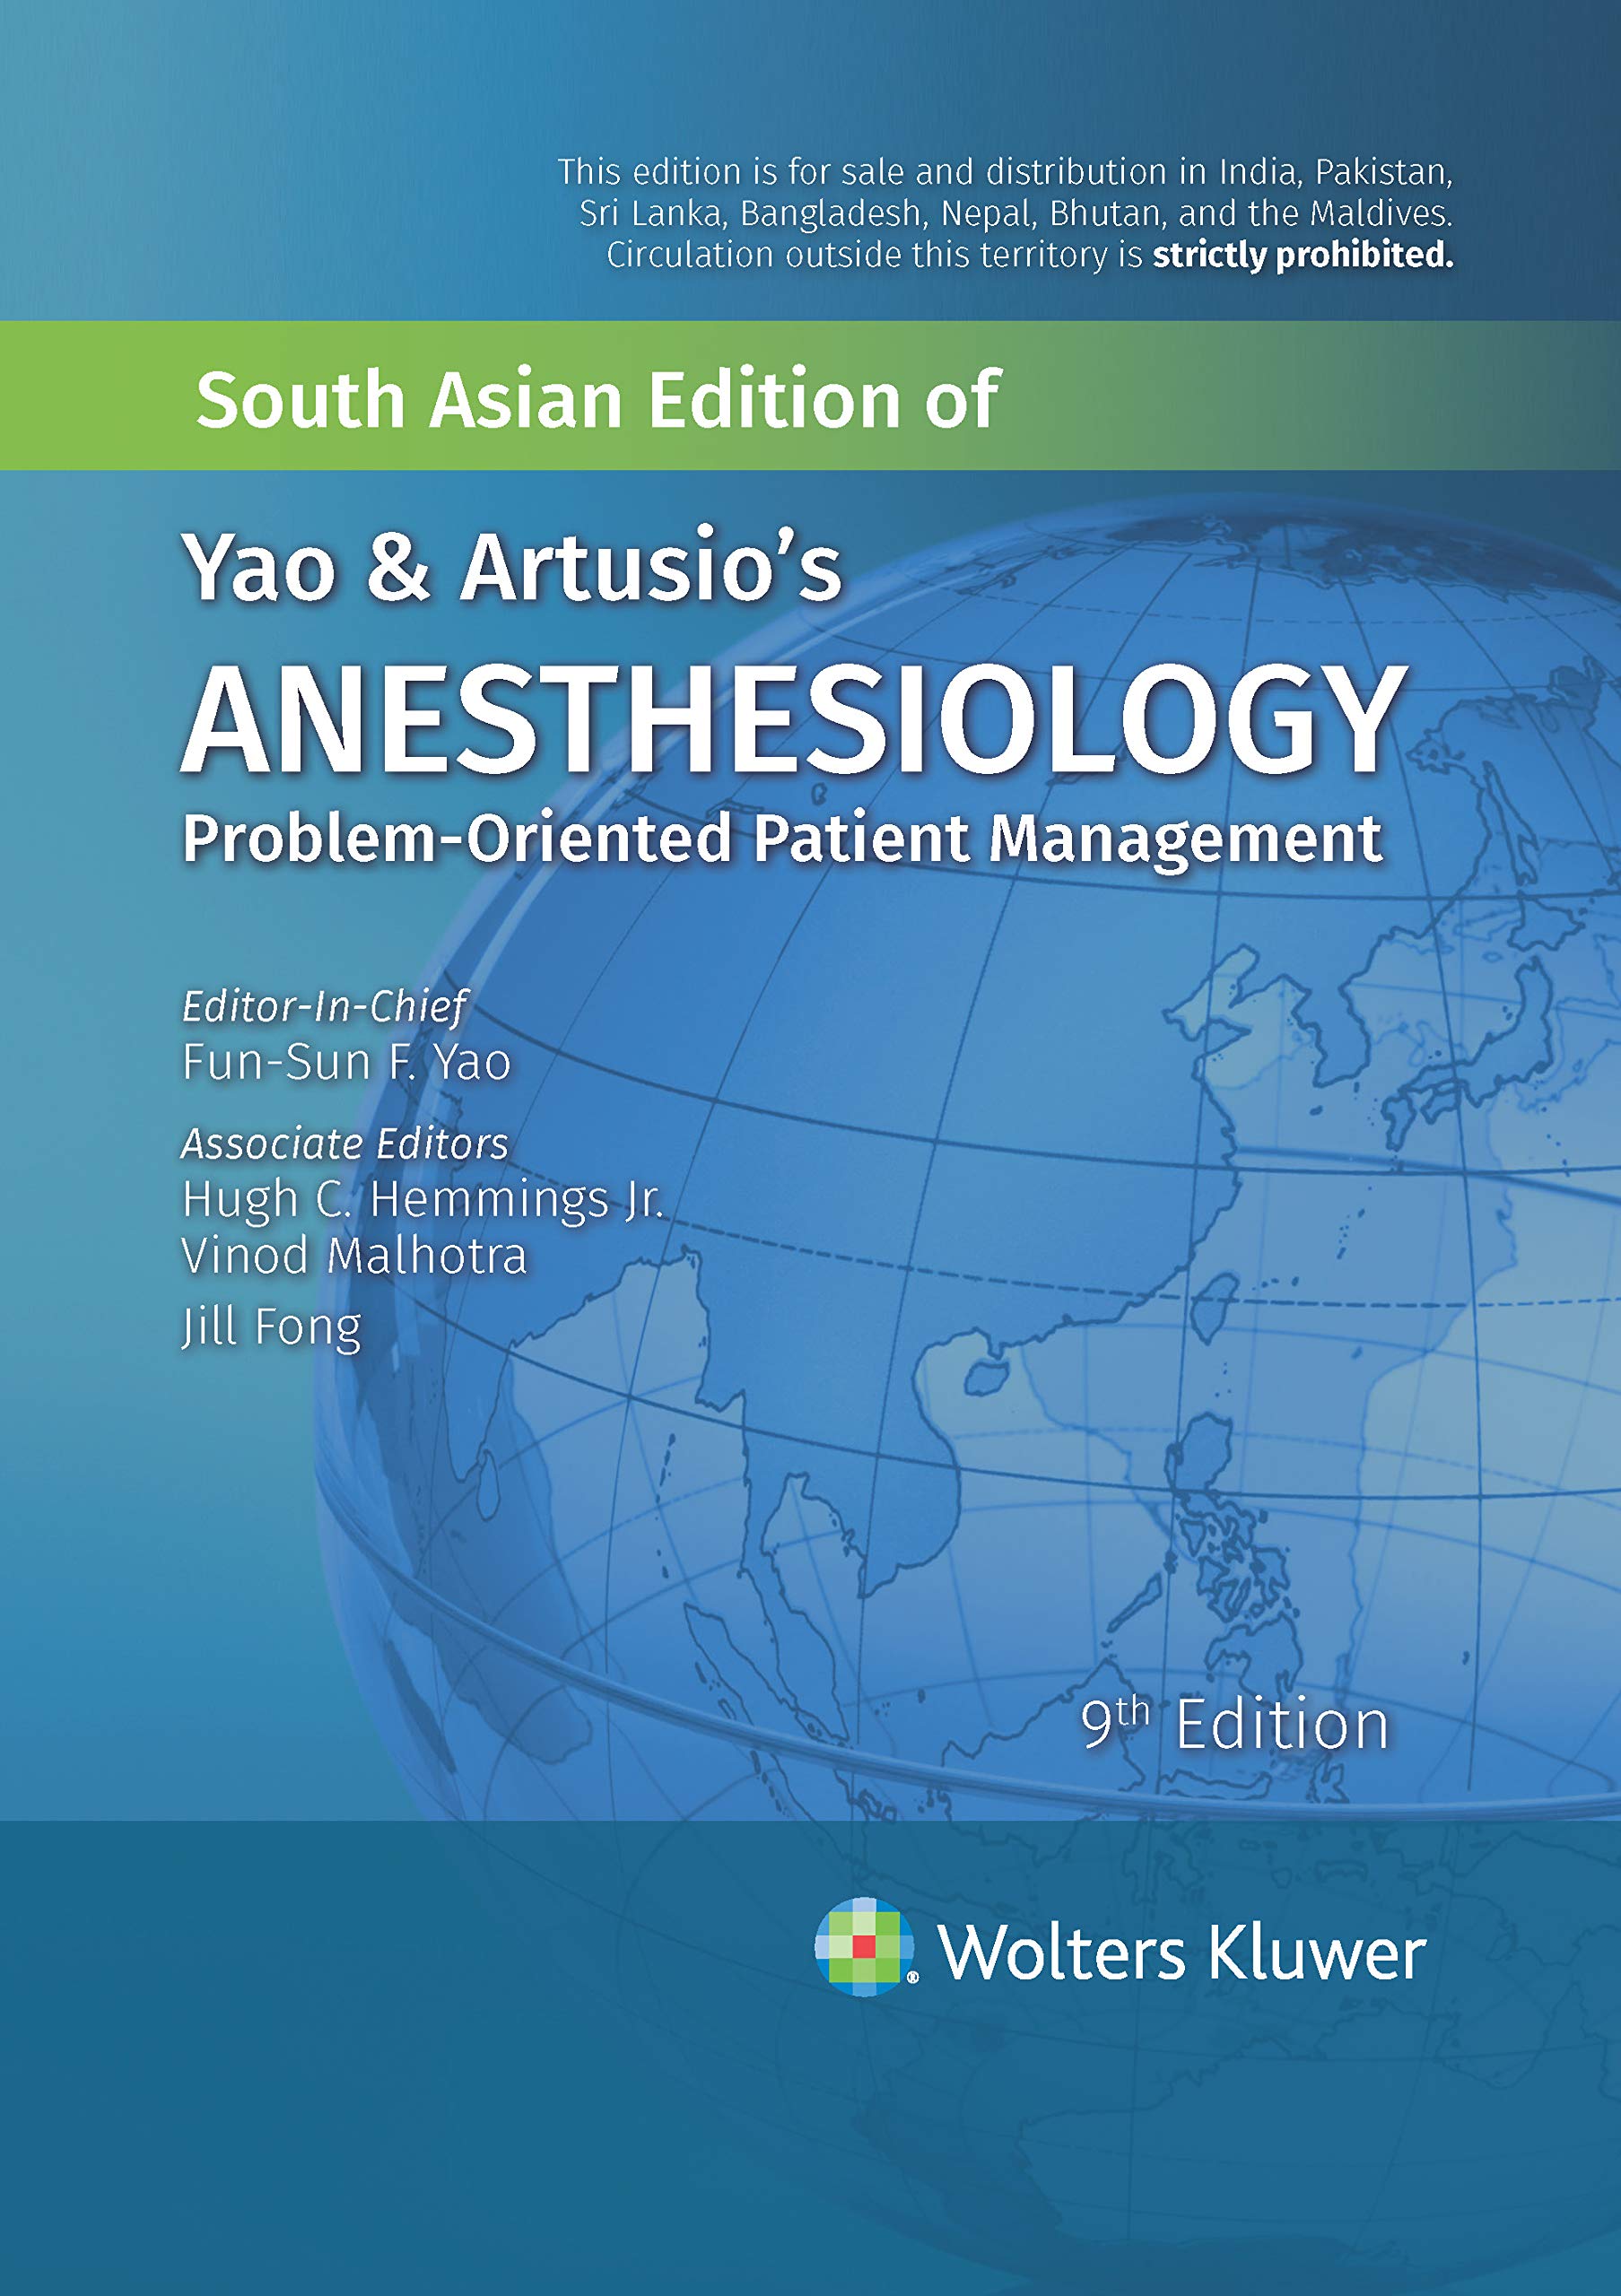 Yao and Artusio’s anesthesiology